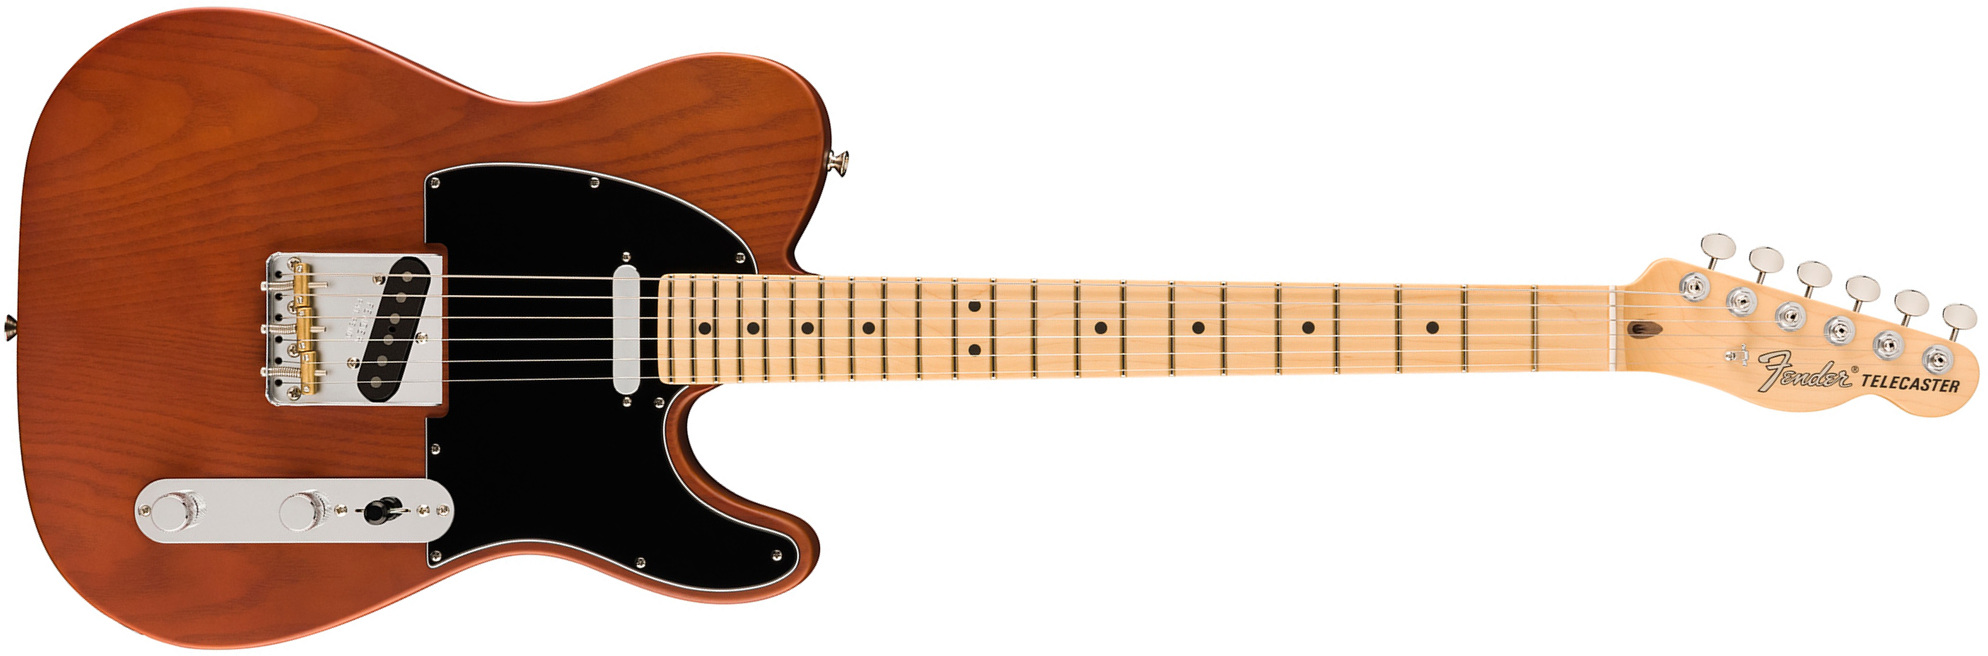 Fender Tele Timber Sassafras American Performer Fsr Ltd Usa 2s Ht Mn - Satin Mocha - Guitare Électrique Forme Str - Main picture